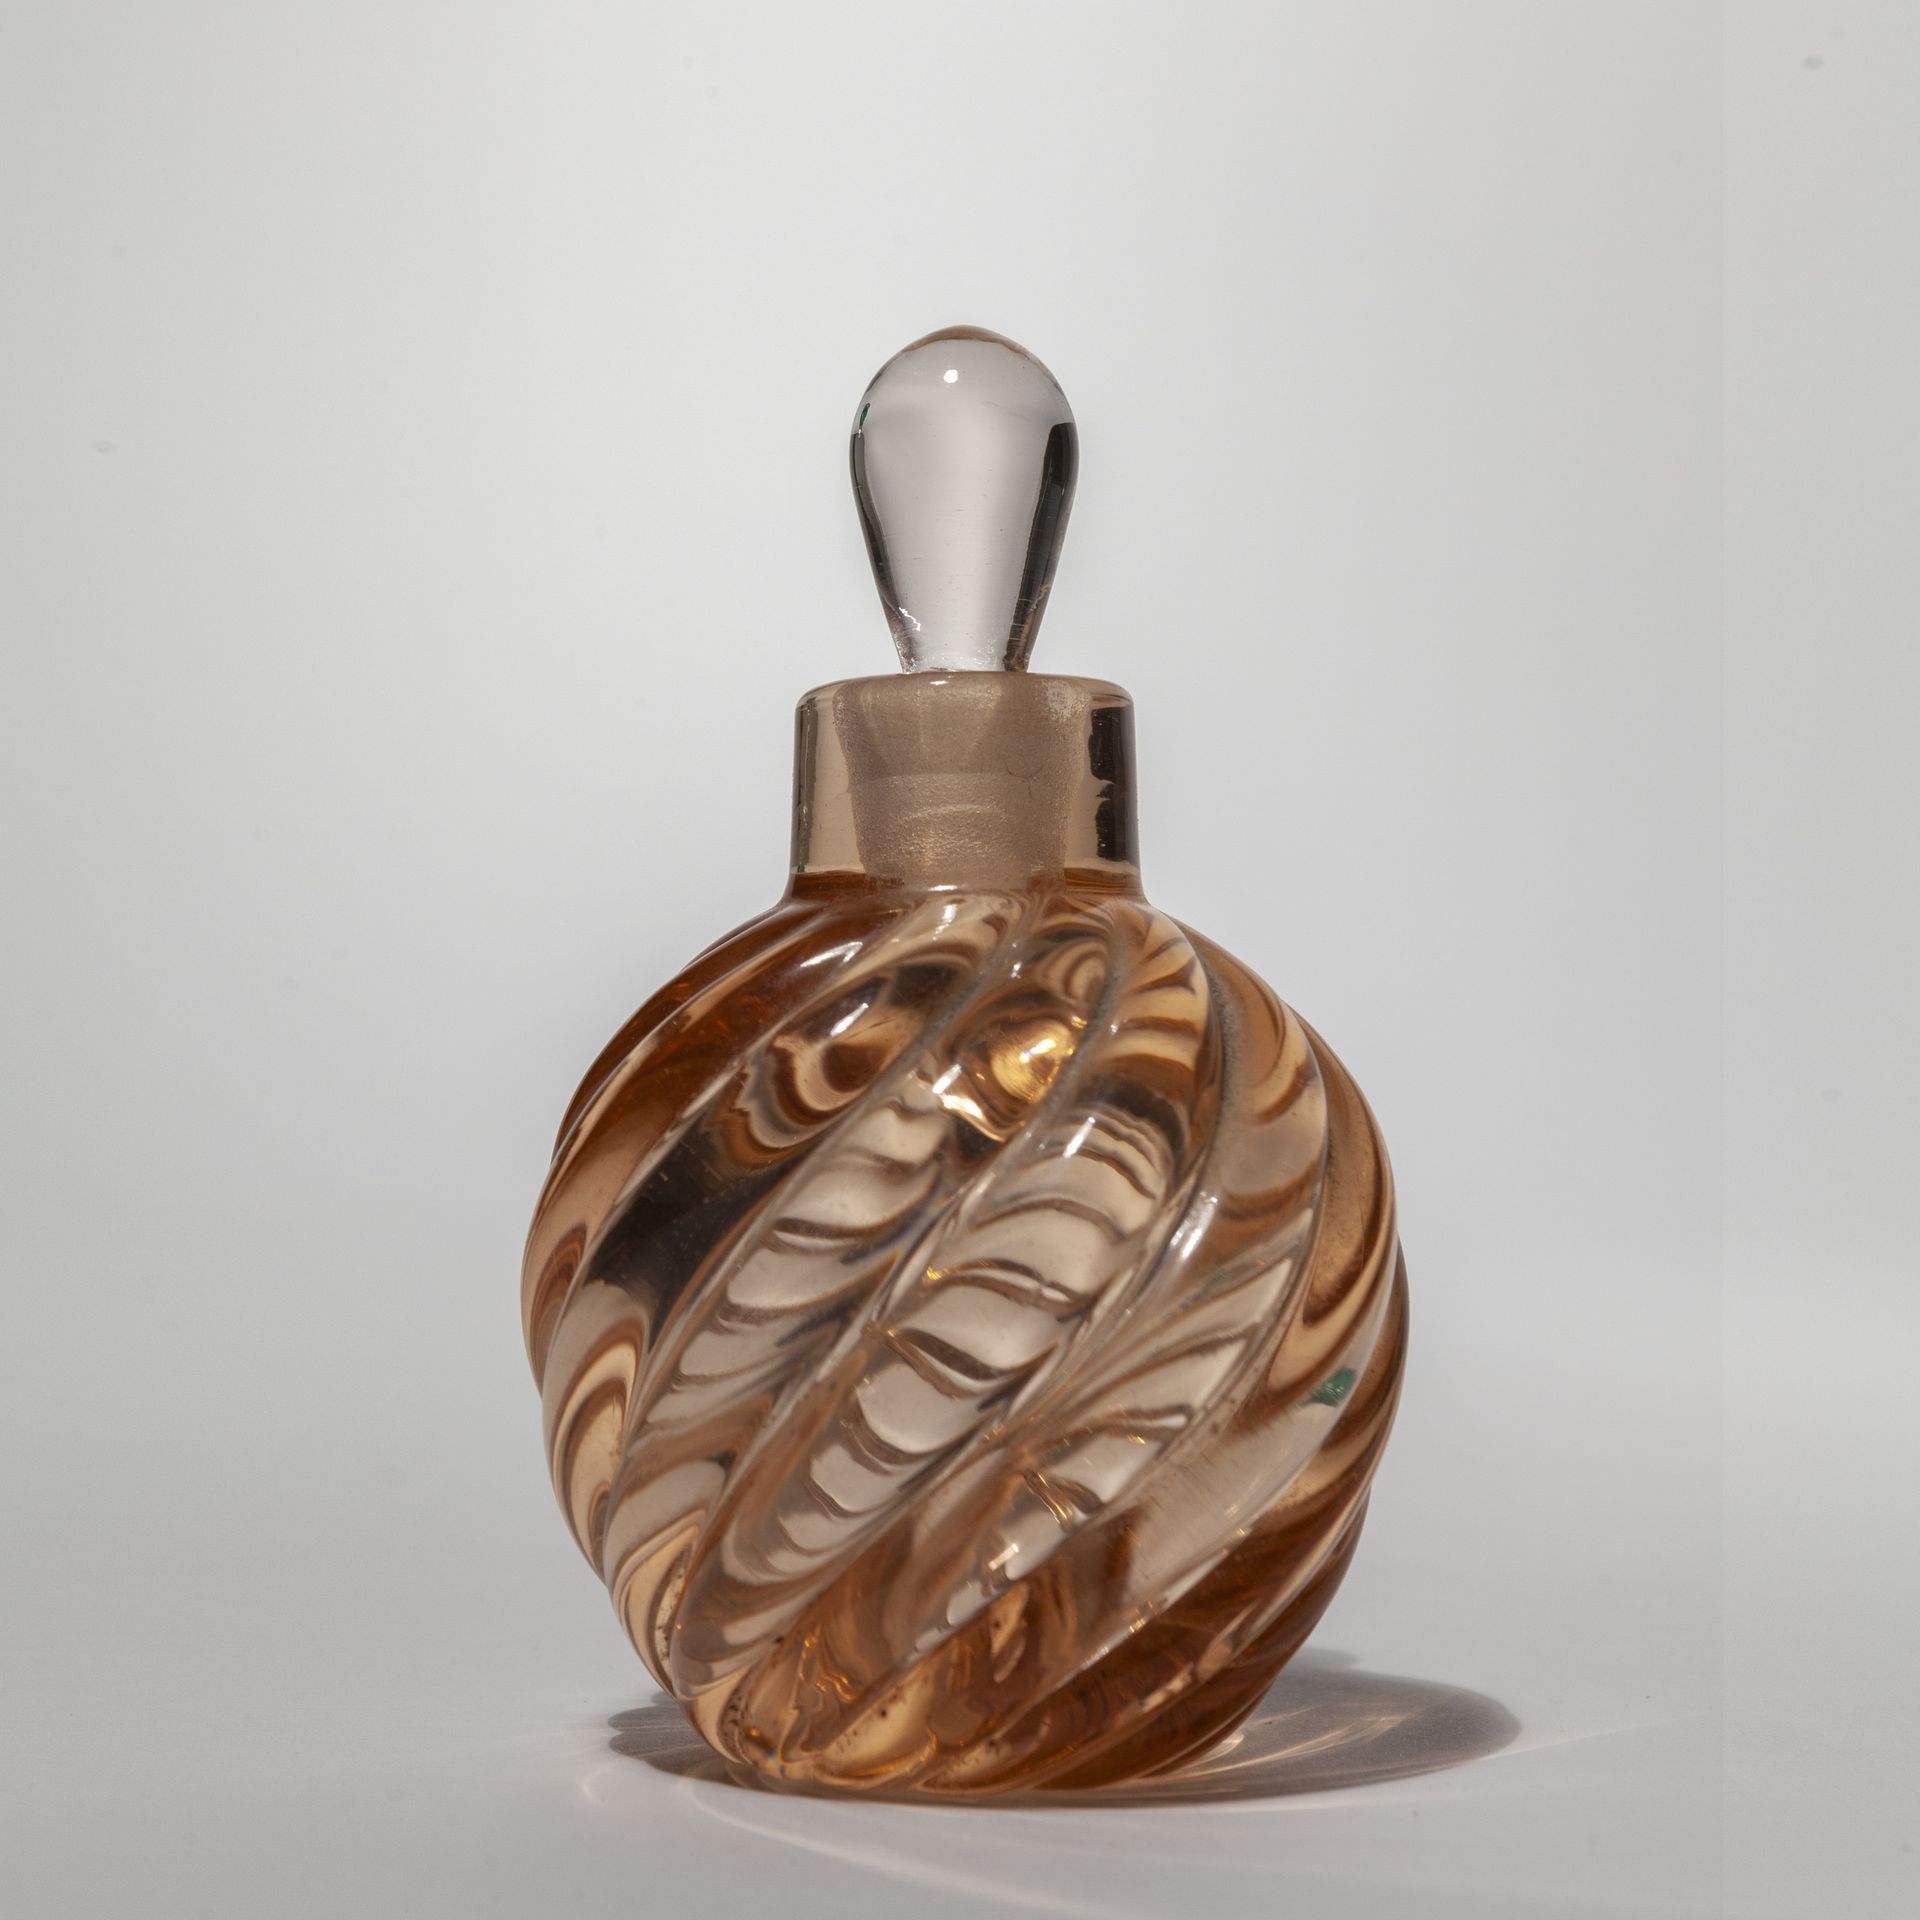 SCARPA CARLO VENINI CARLO SCARPA VENINI
透明的鲑鱼玻璃香水瓶，有扭曲的肋骨 1930年代
酸性标记 "VENINI mu&hellip;